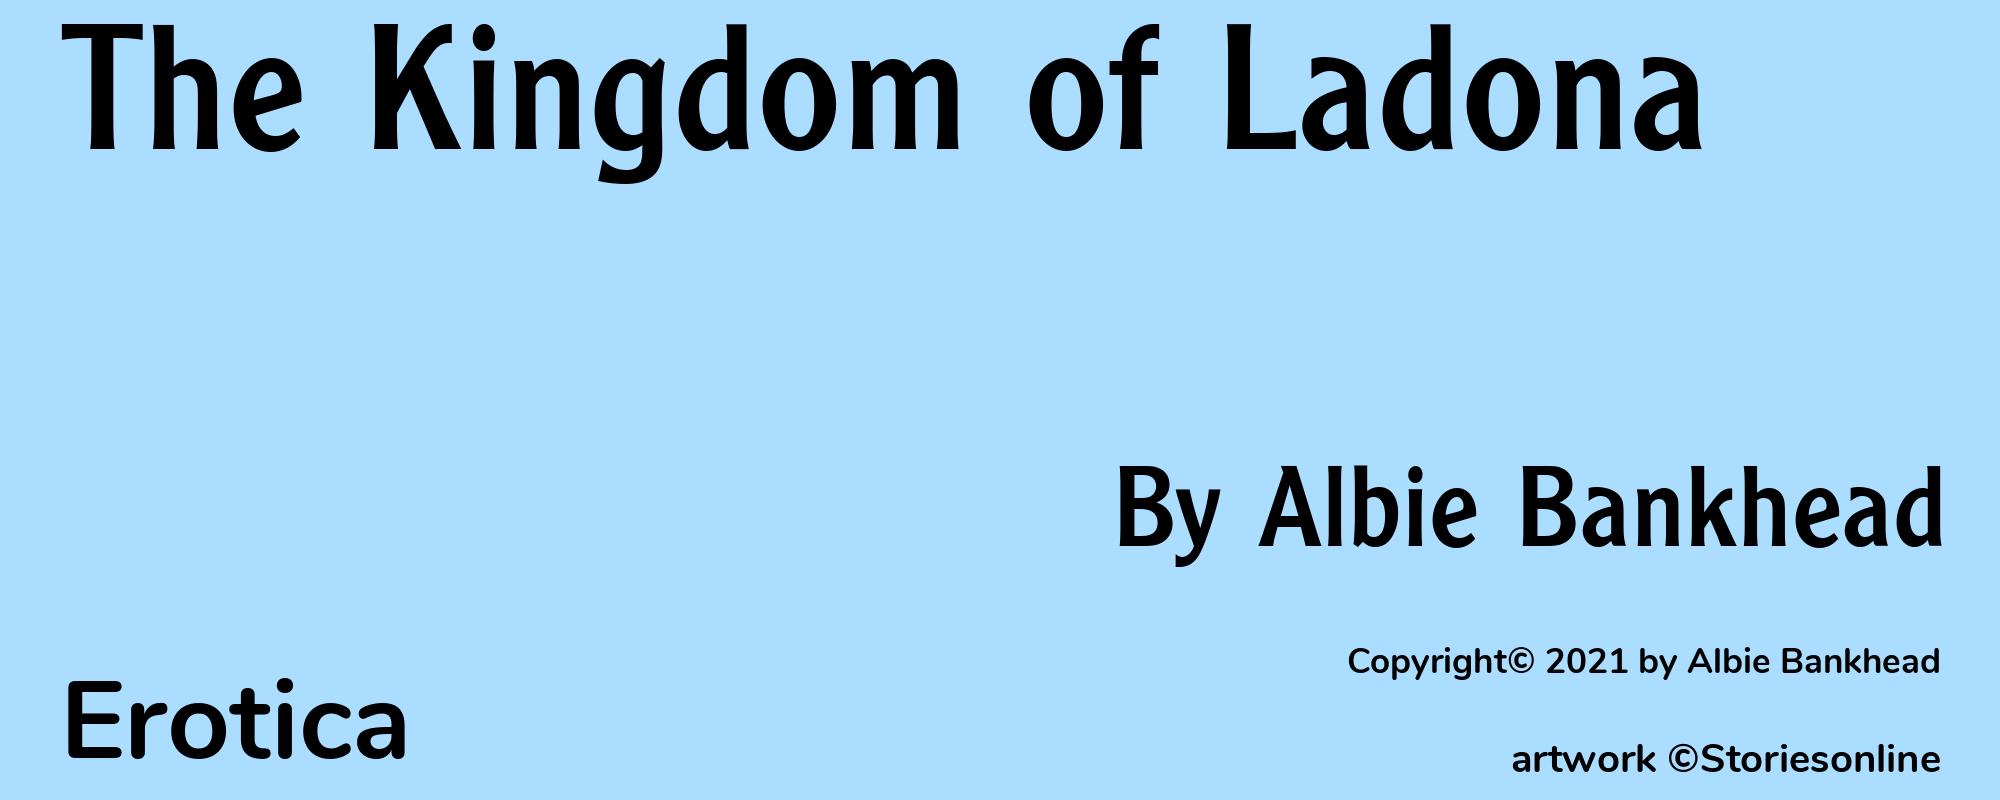 The Kingdom of Ladona - Cover